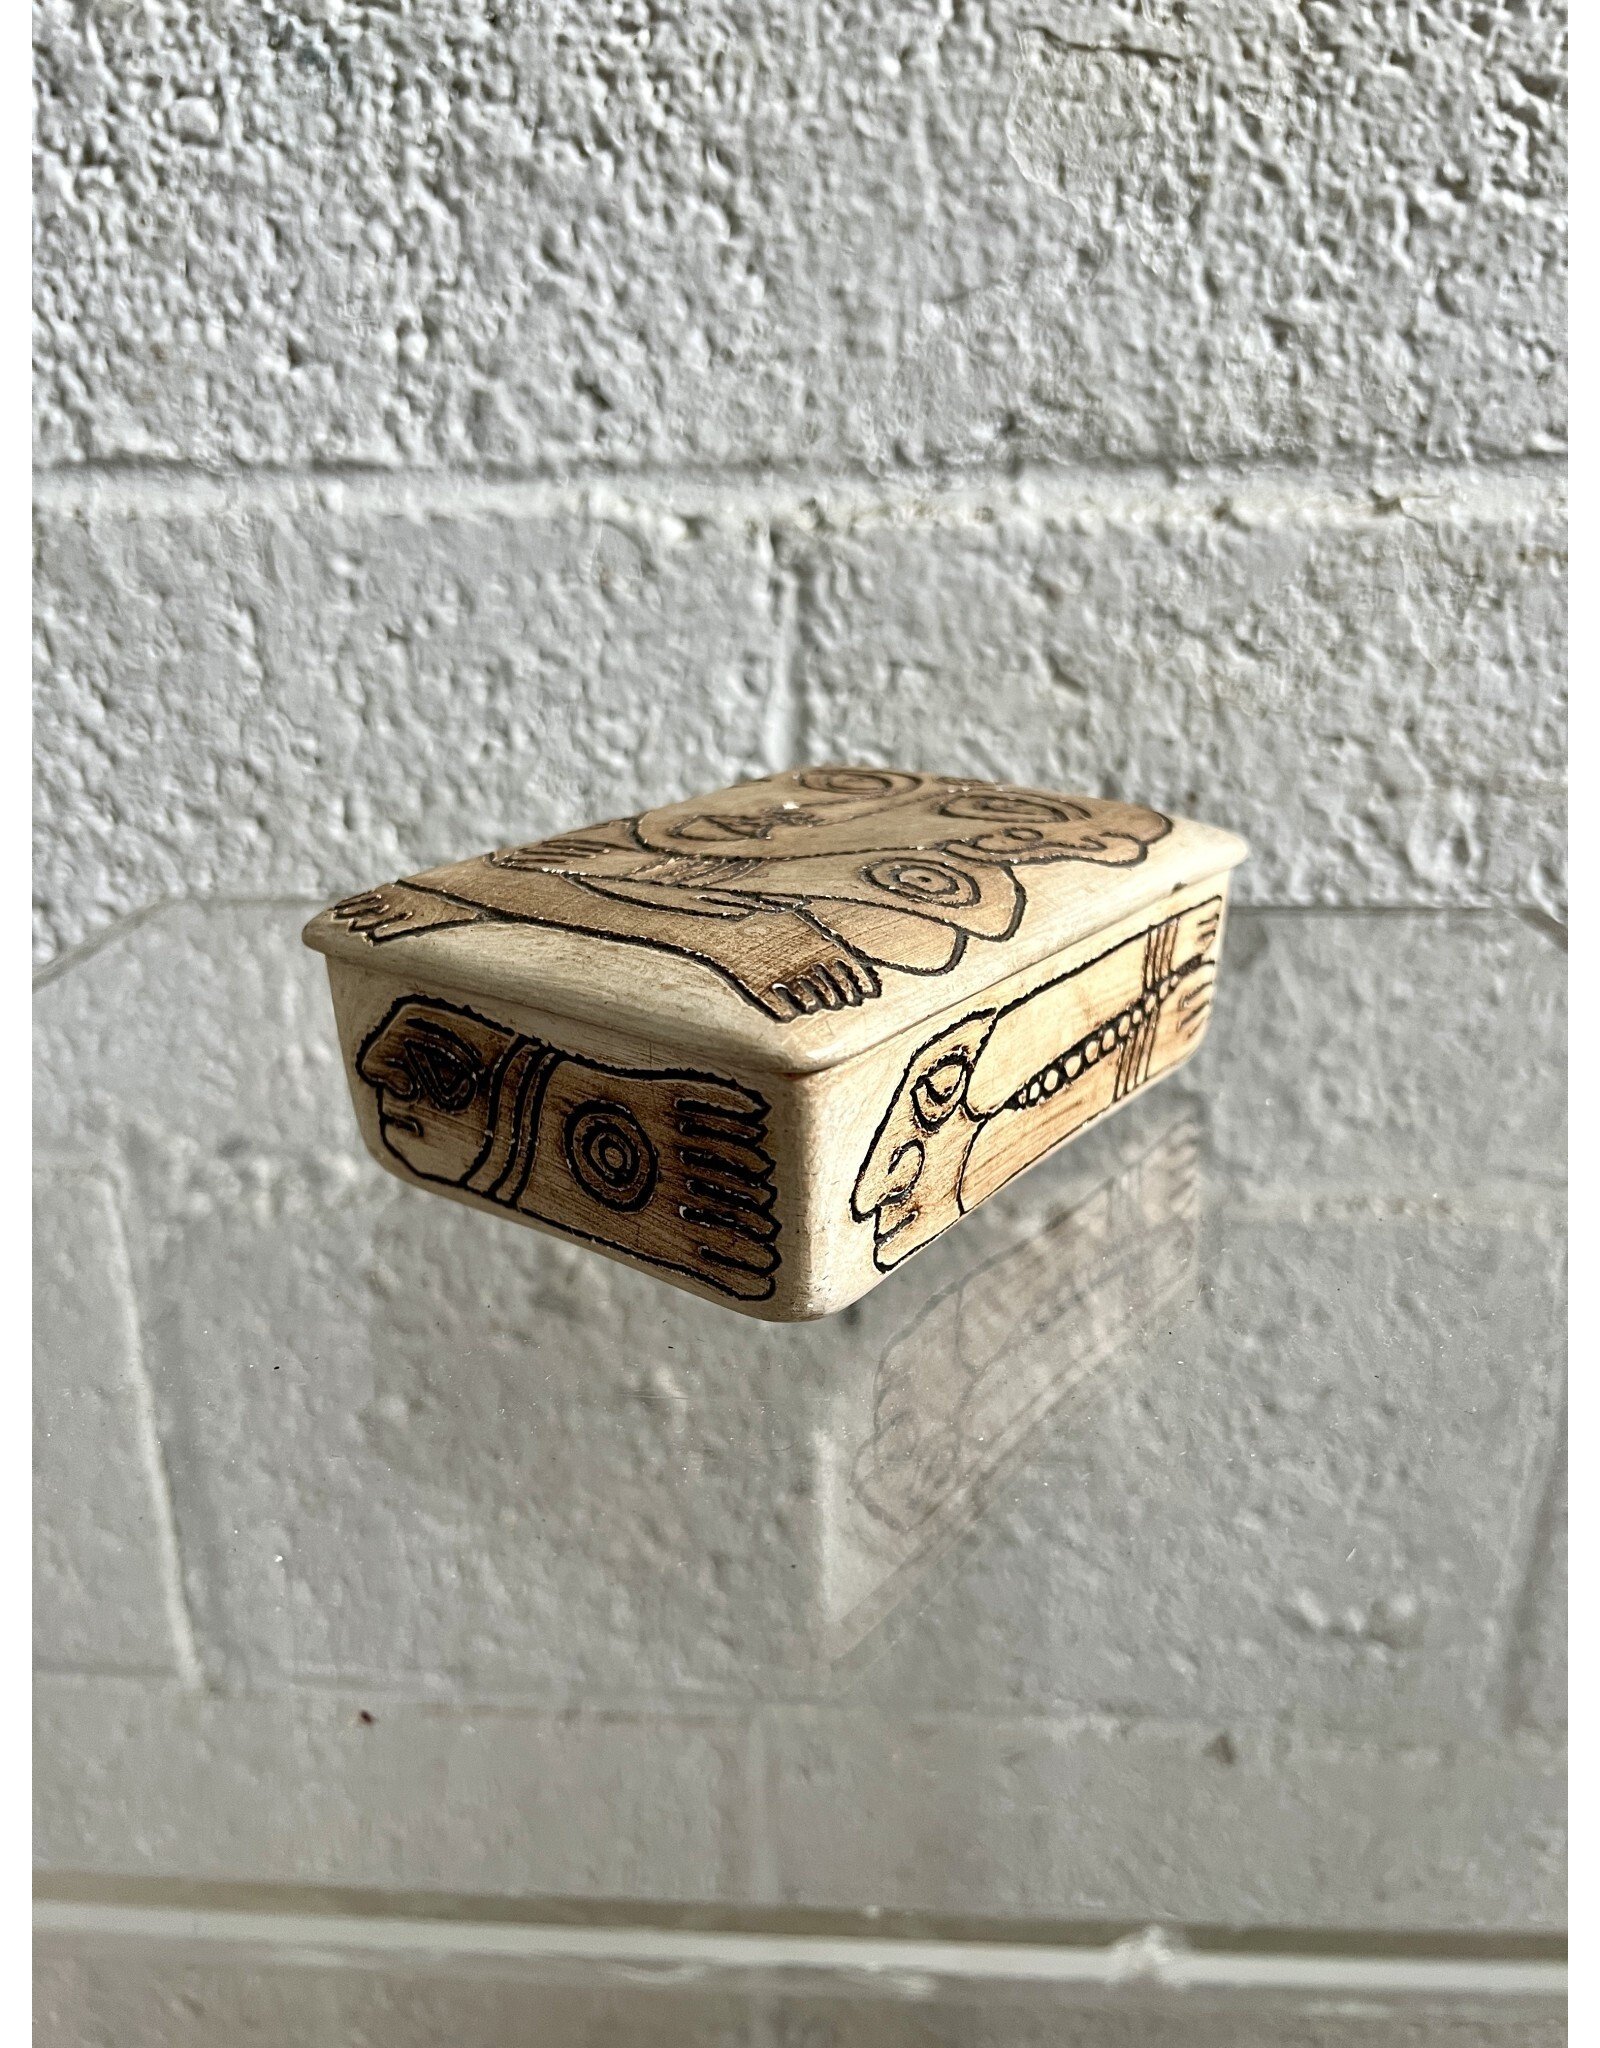 Small handmade box, sgnd W. Ledesma '79